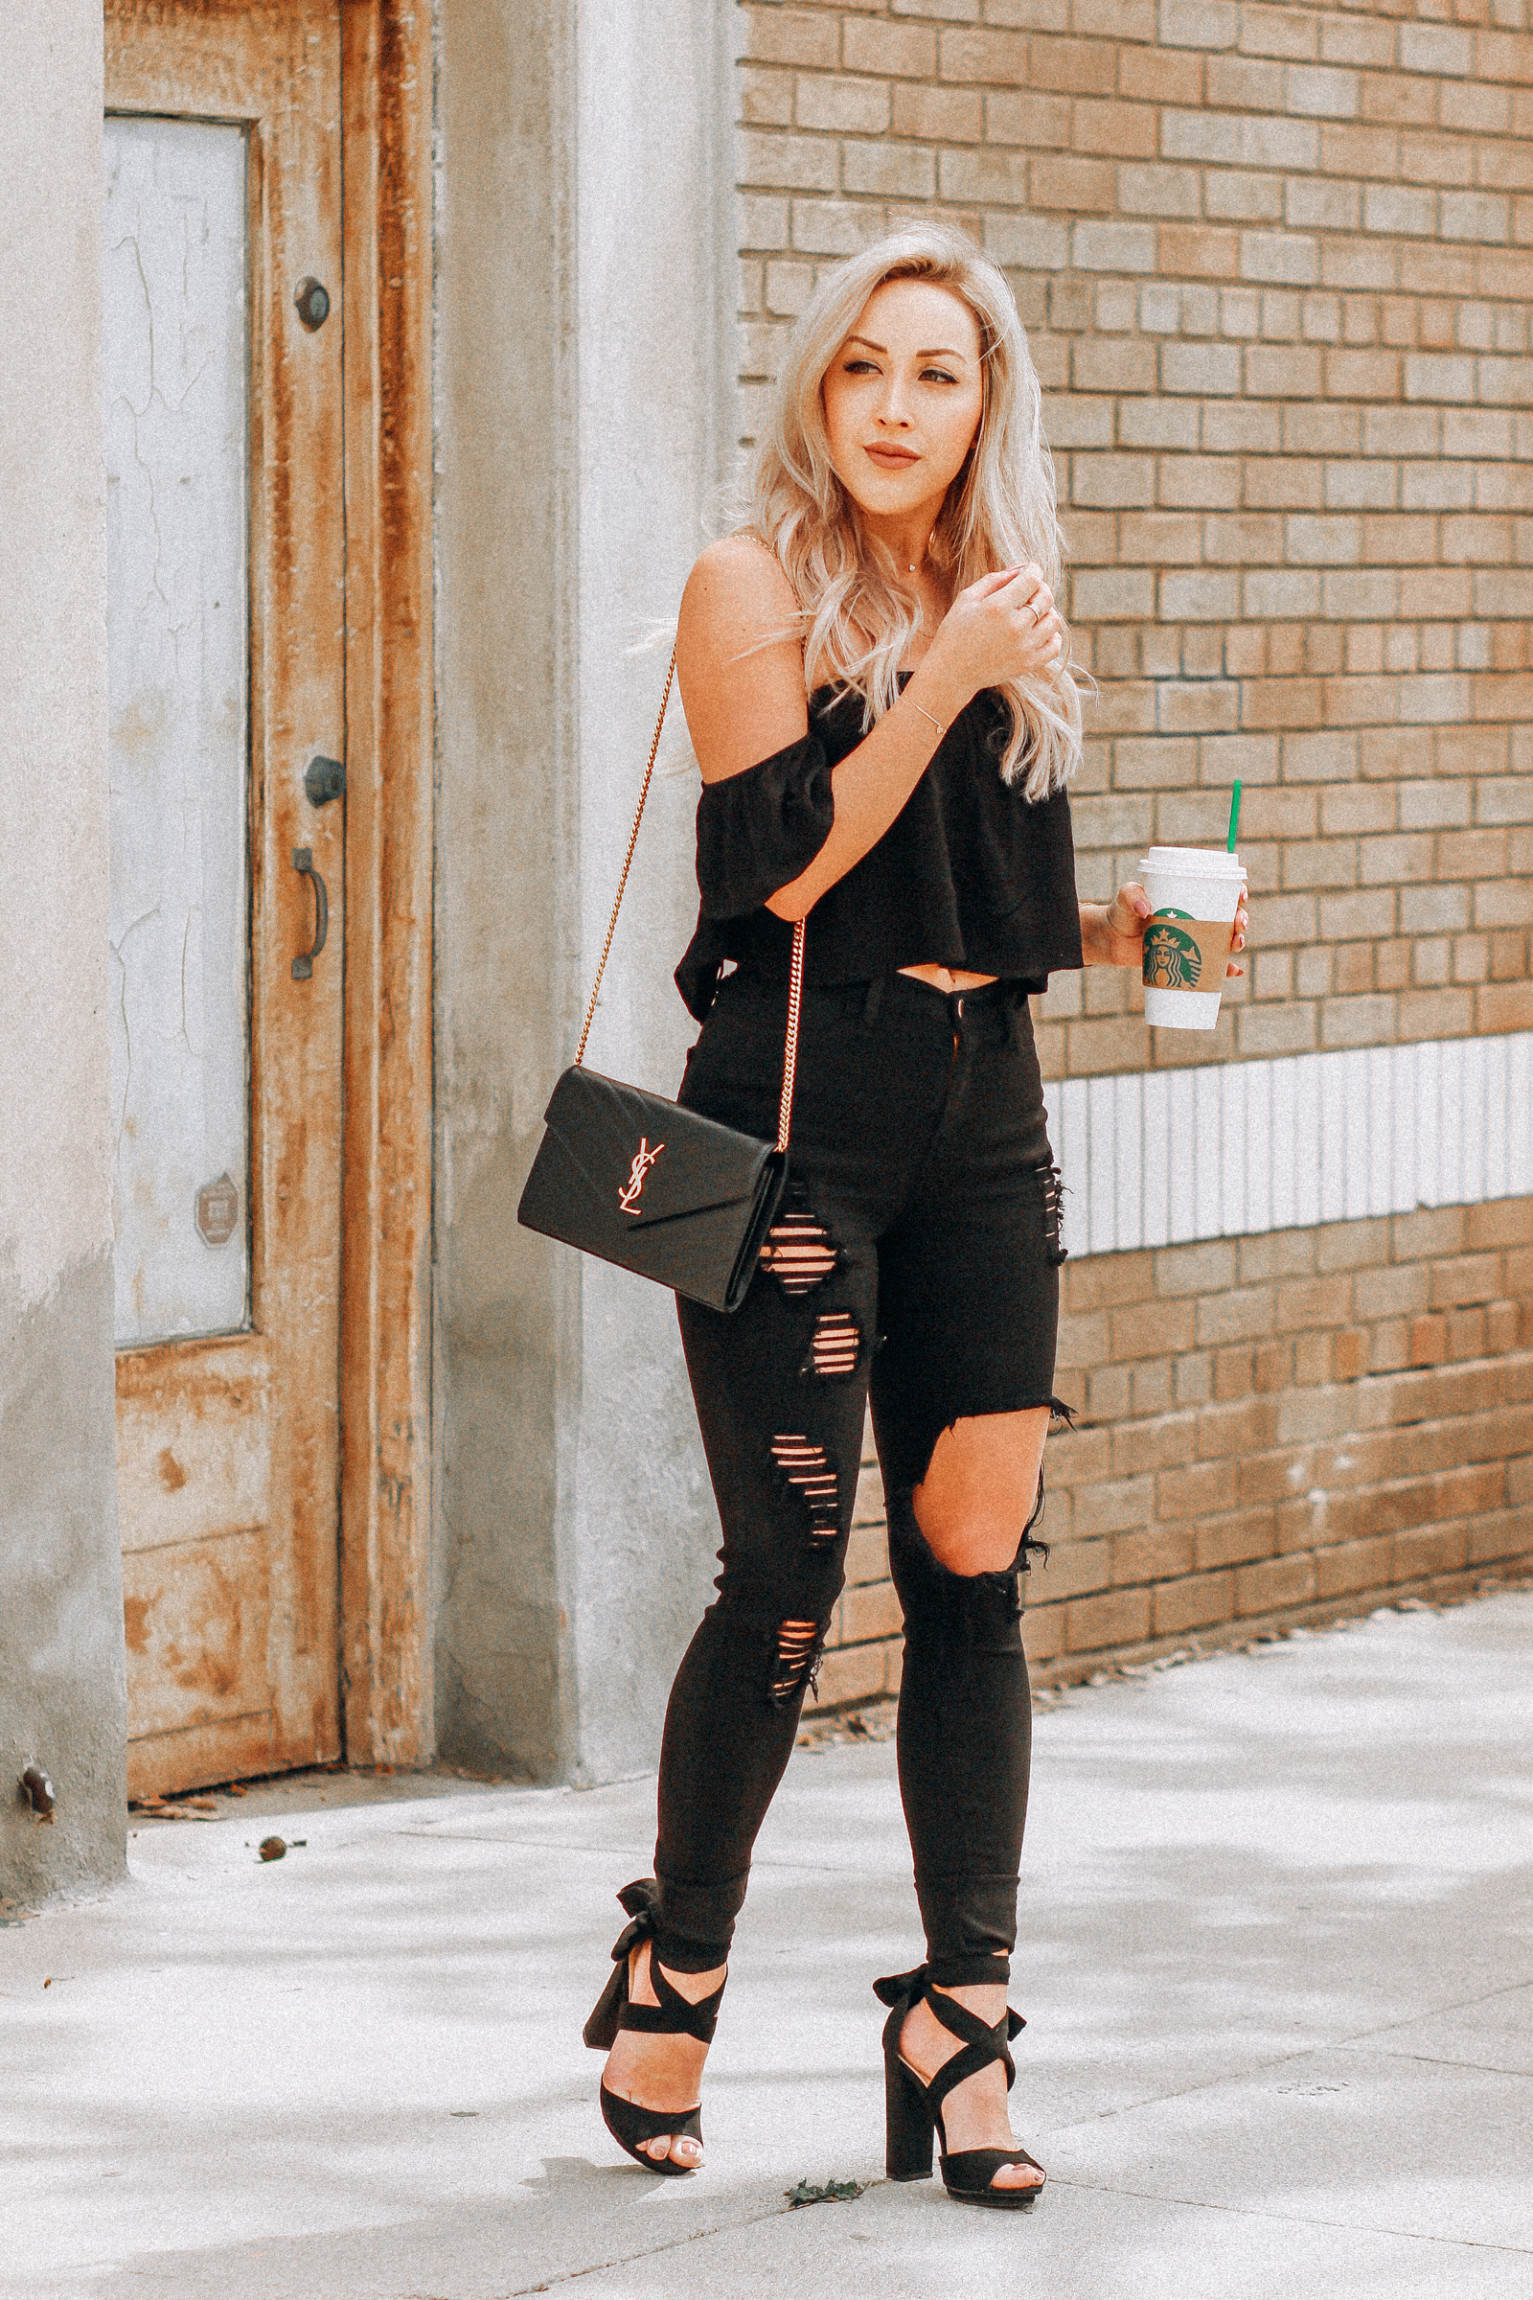 Black Ripped Jeans | Black Backless Summer Top | Black YSL Bag | Blondie in the City by Hayley Larue